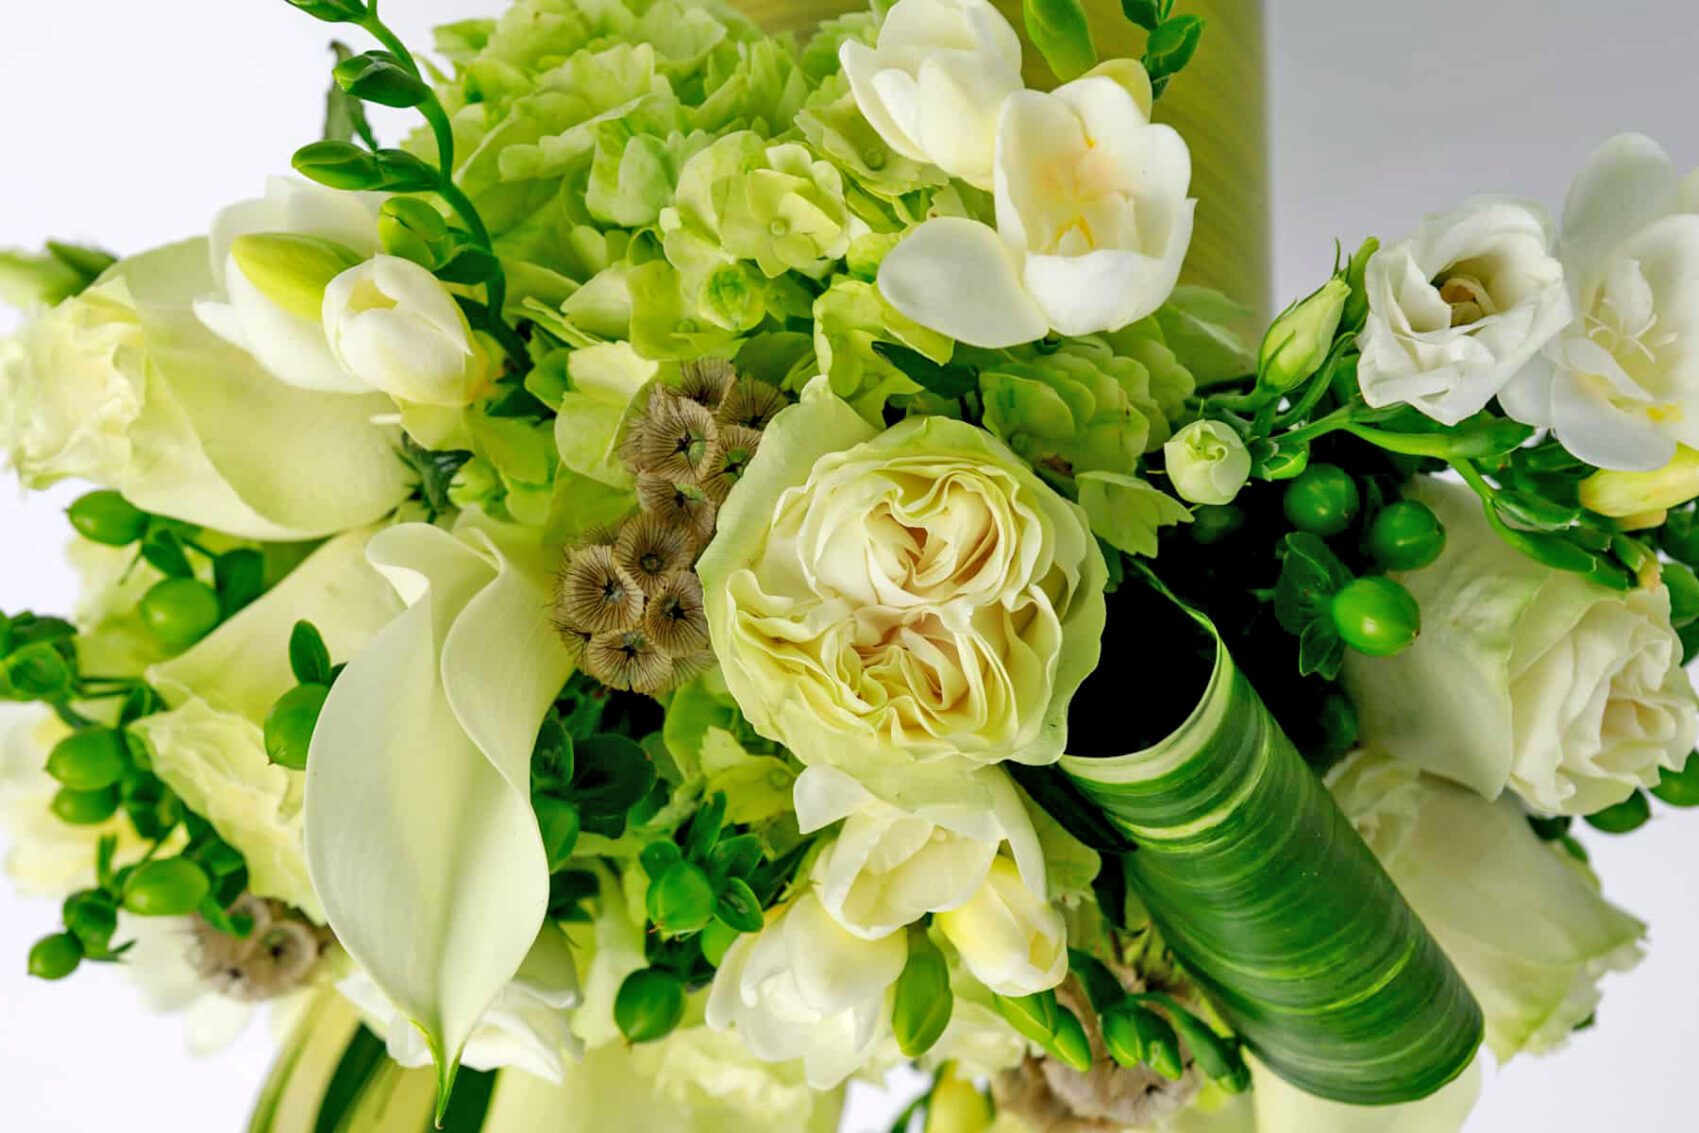 Freesia2 Green Floral Arrangement: Green Hydrangeas, Freesia, White Roses, and Calla Lilies